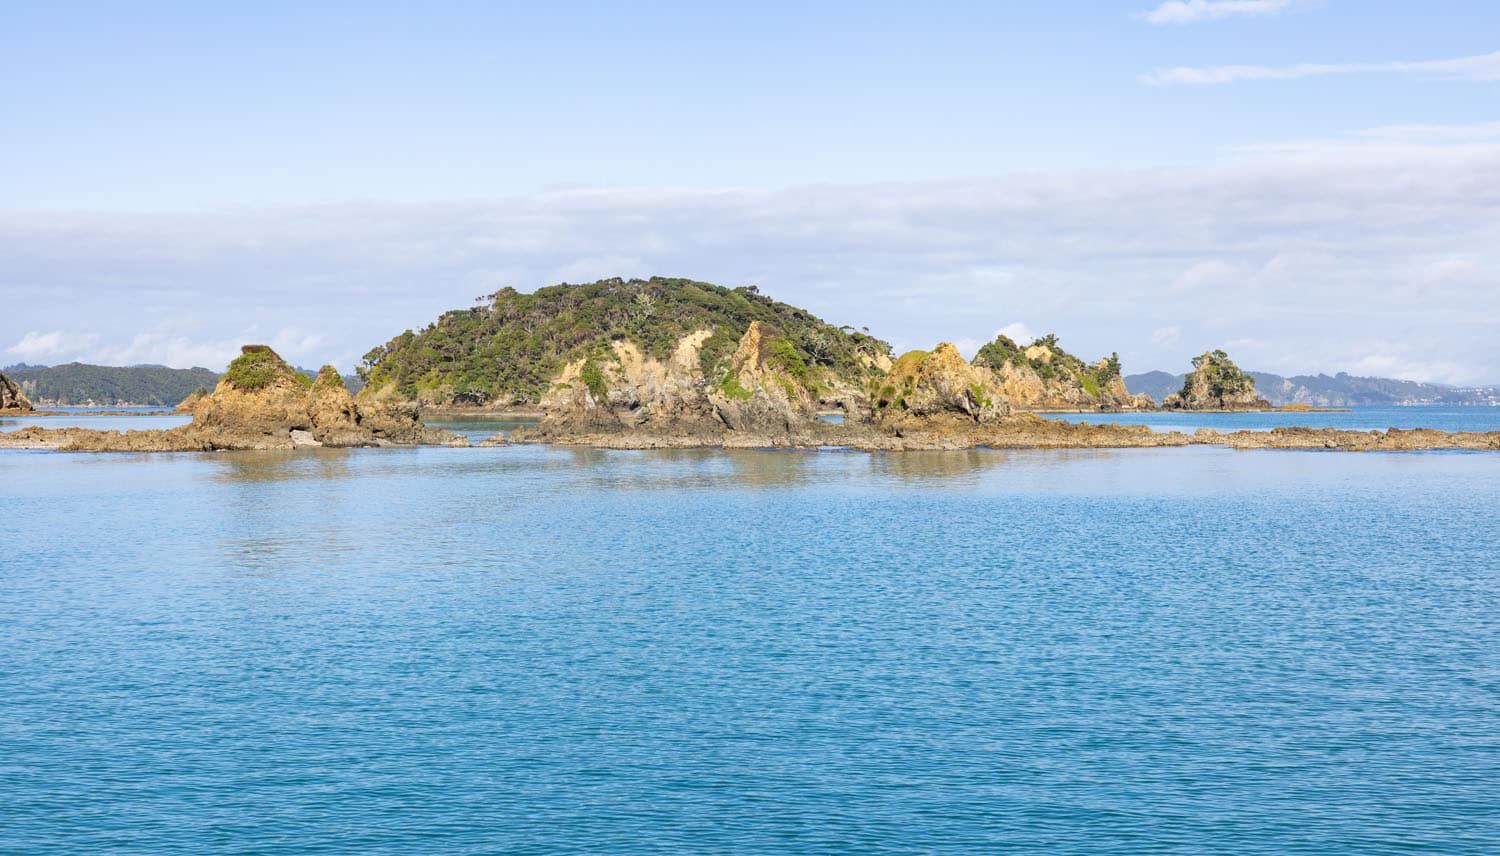 Poroporo Island